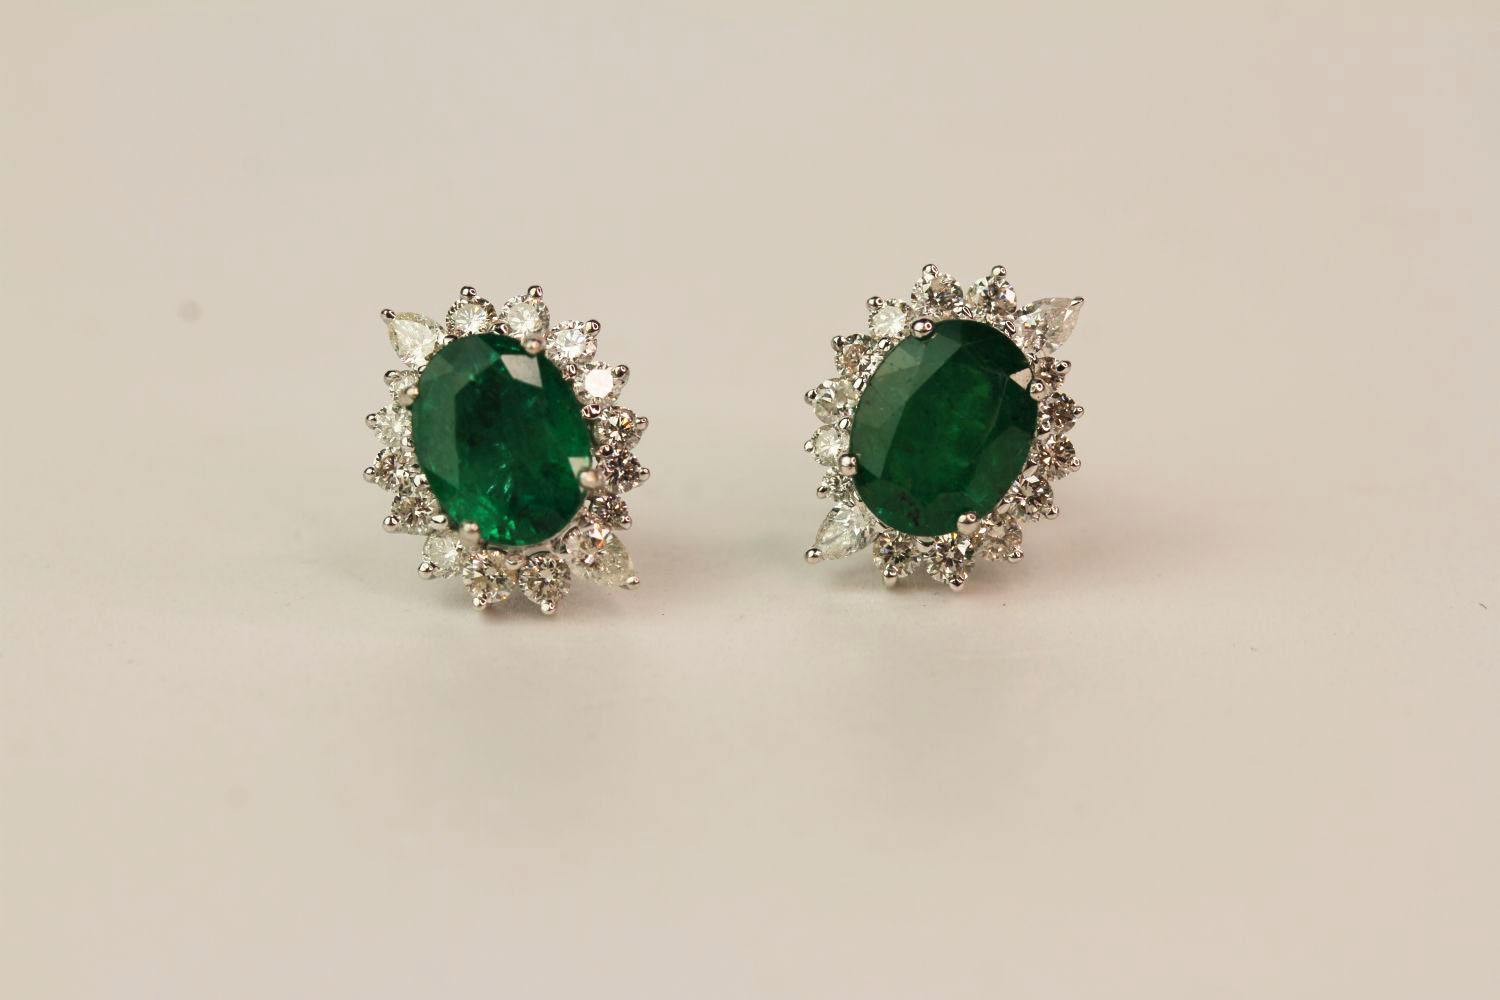 Pair Of Emerald & Diamond Earrings, set with round brilliant diamonds